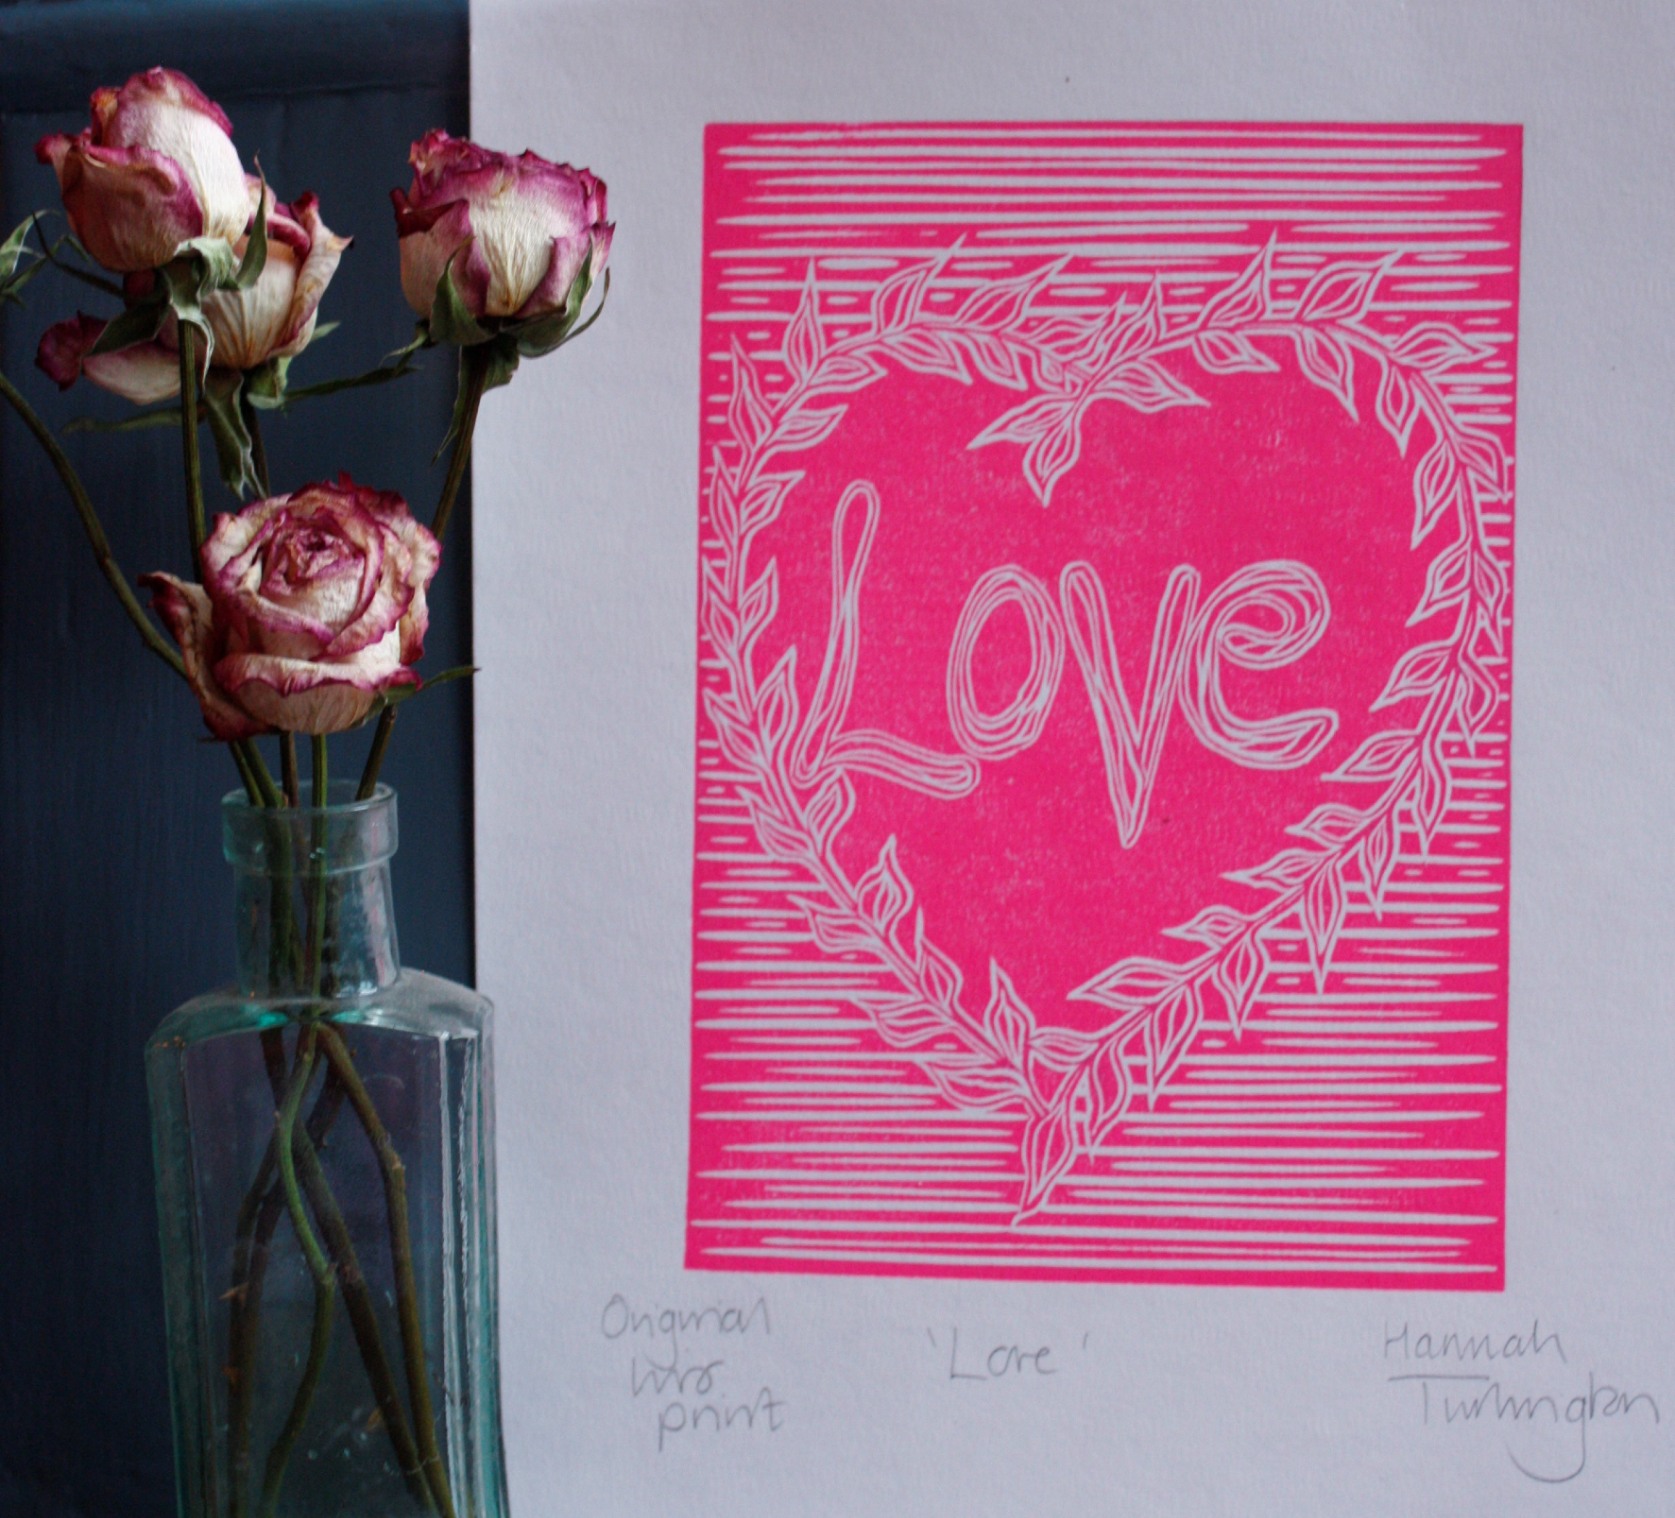 Hannah Turlington's Valentine's design